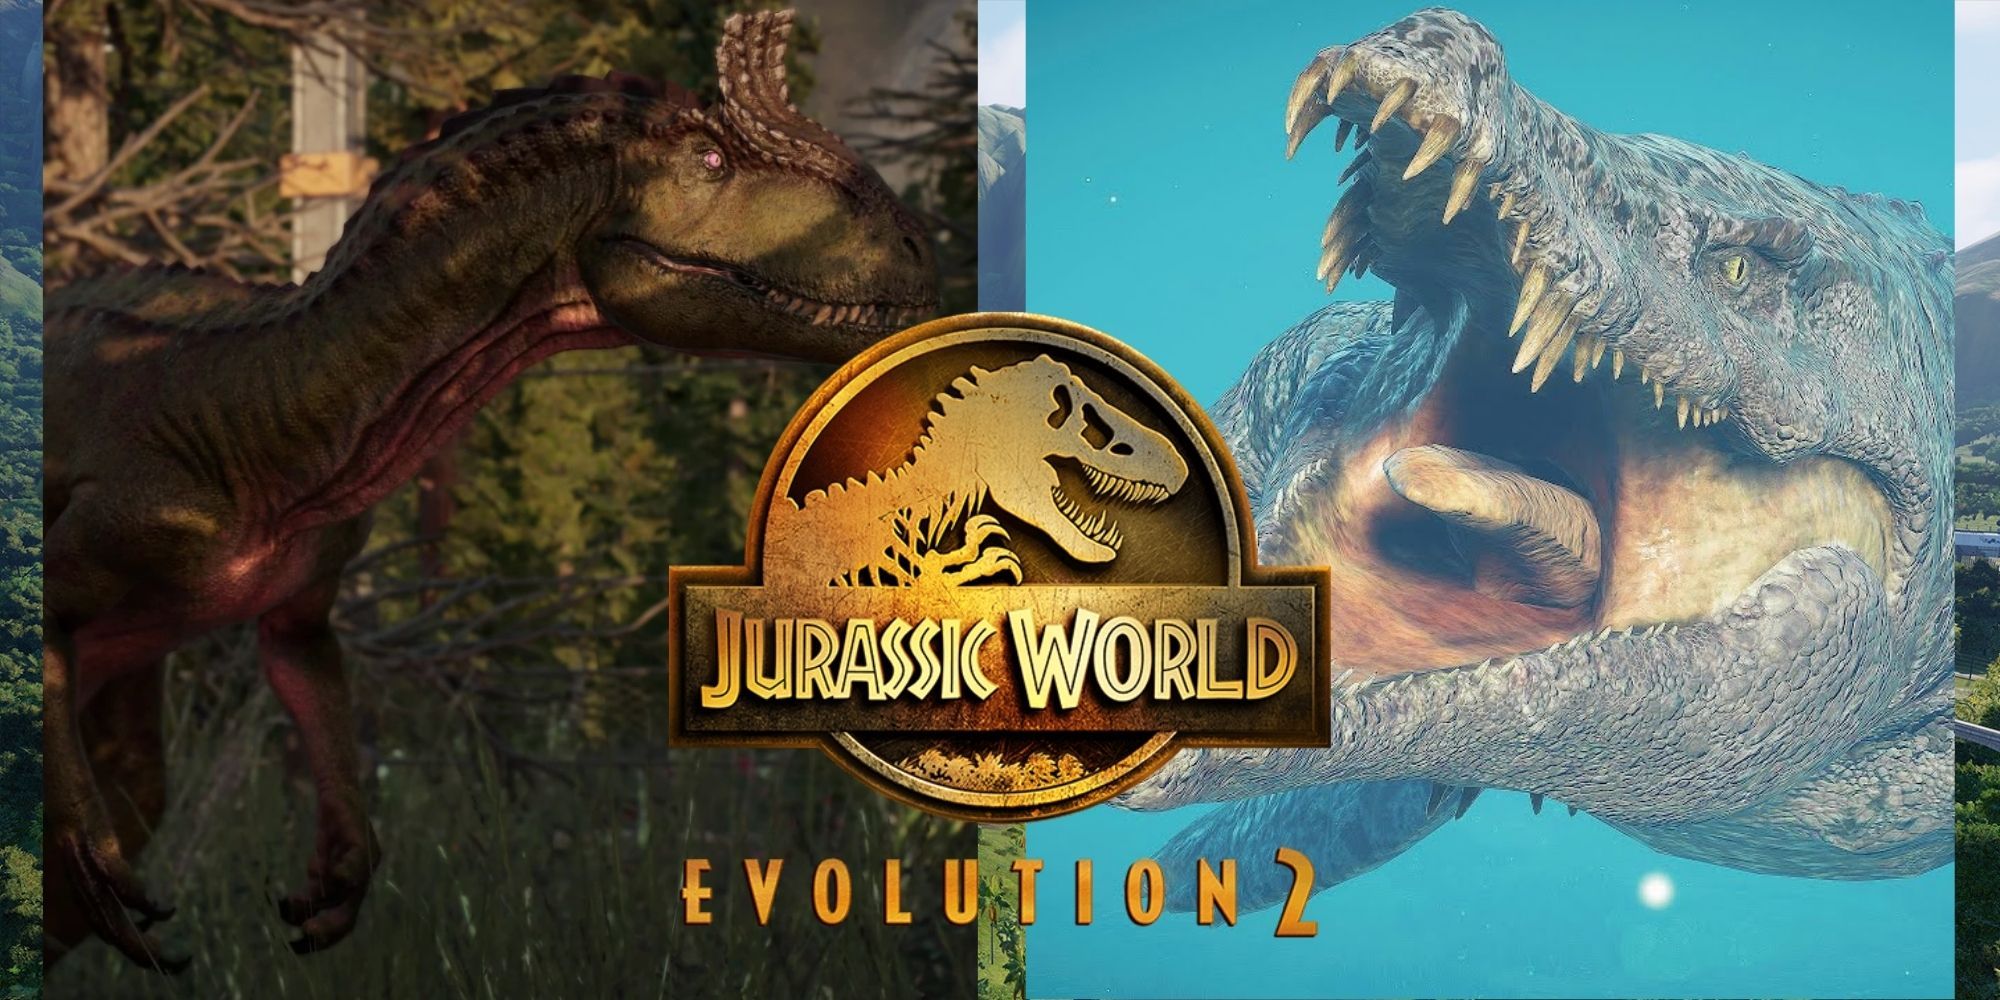 World evolution 2 jurassic Jurassic World